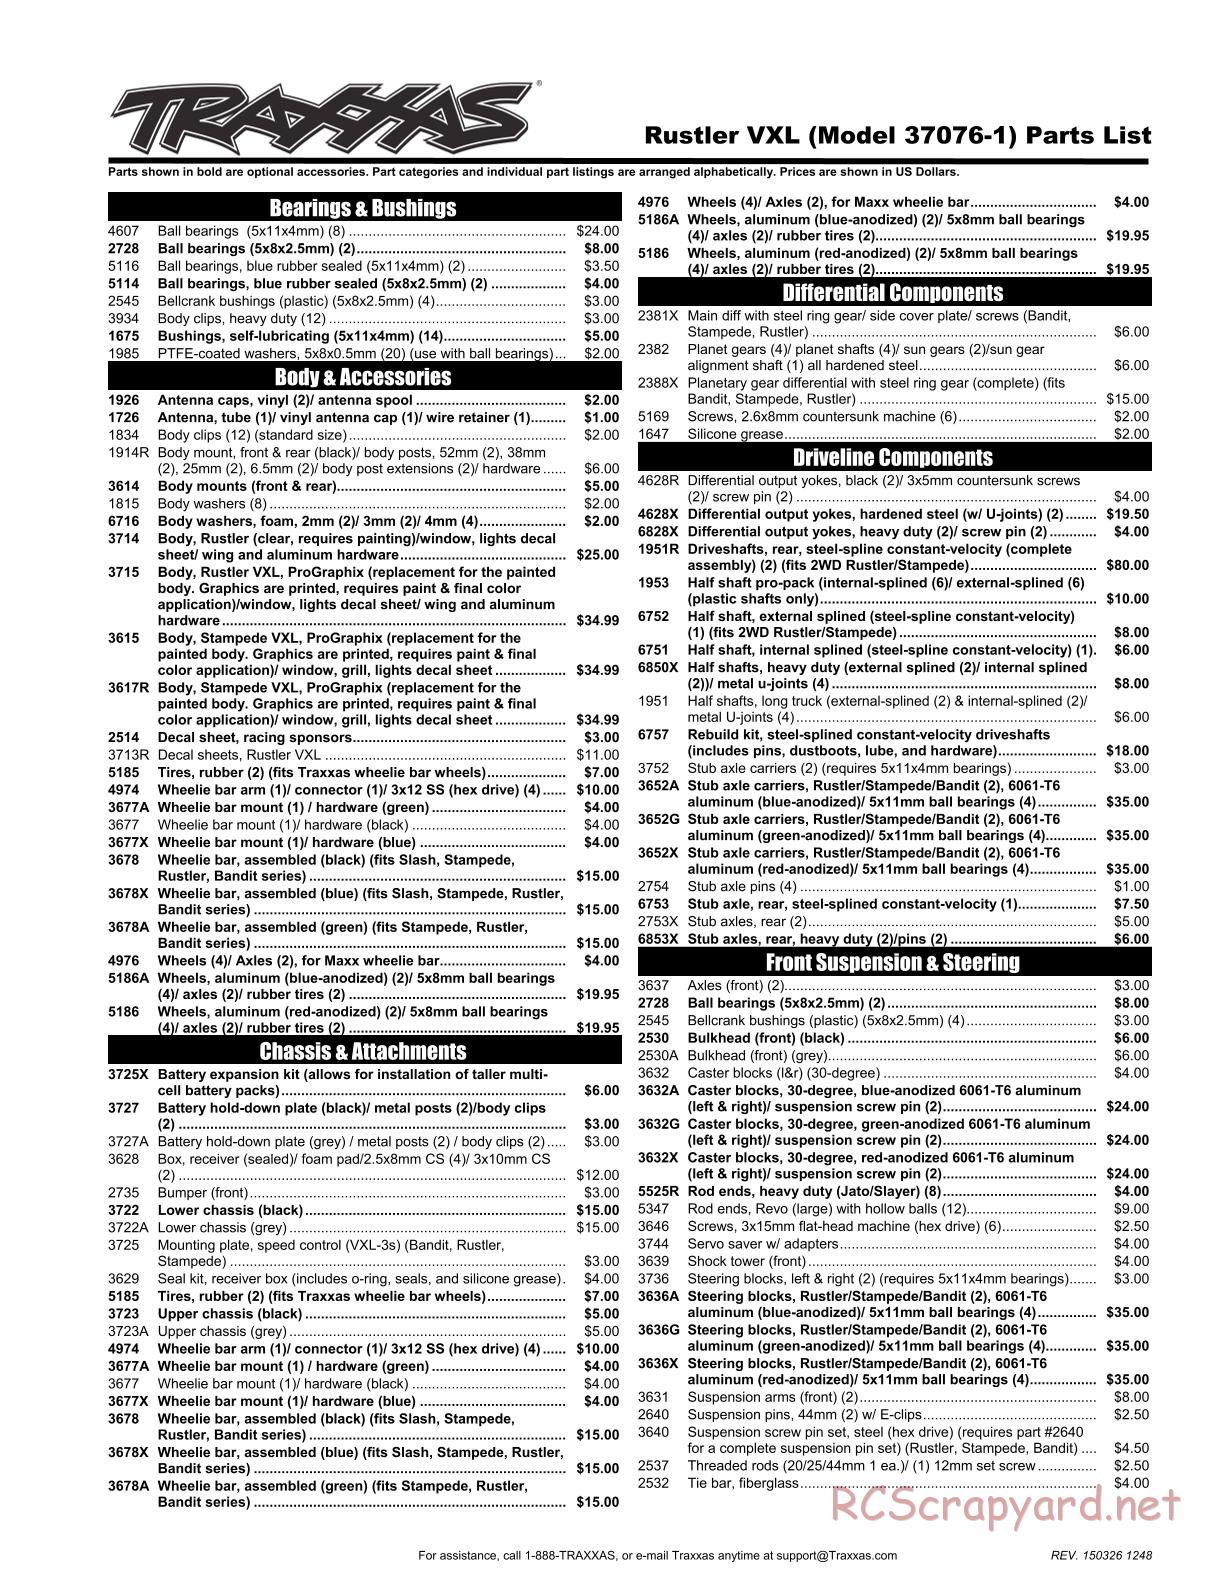 Traxxas - Rustler VXL (2015) - Parts List - Page 1